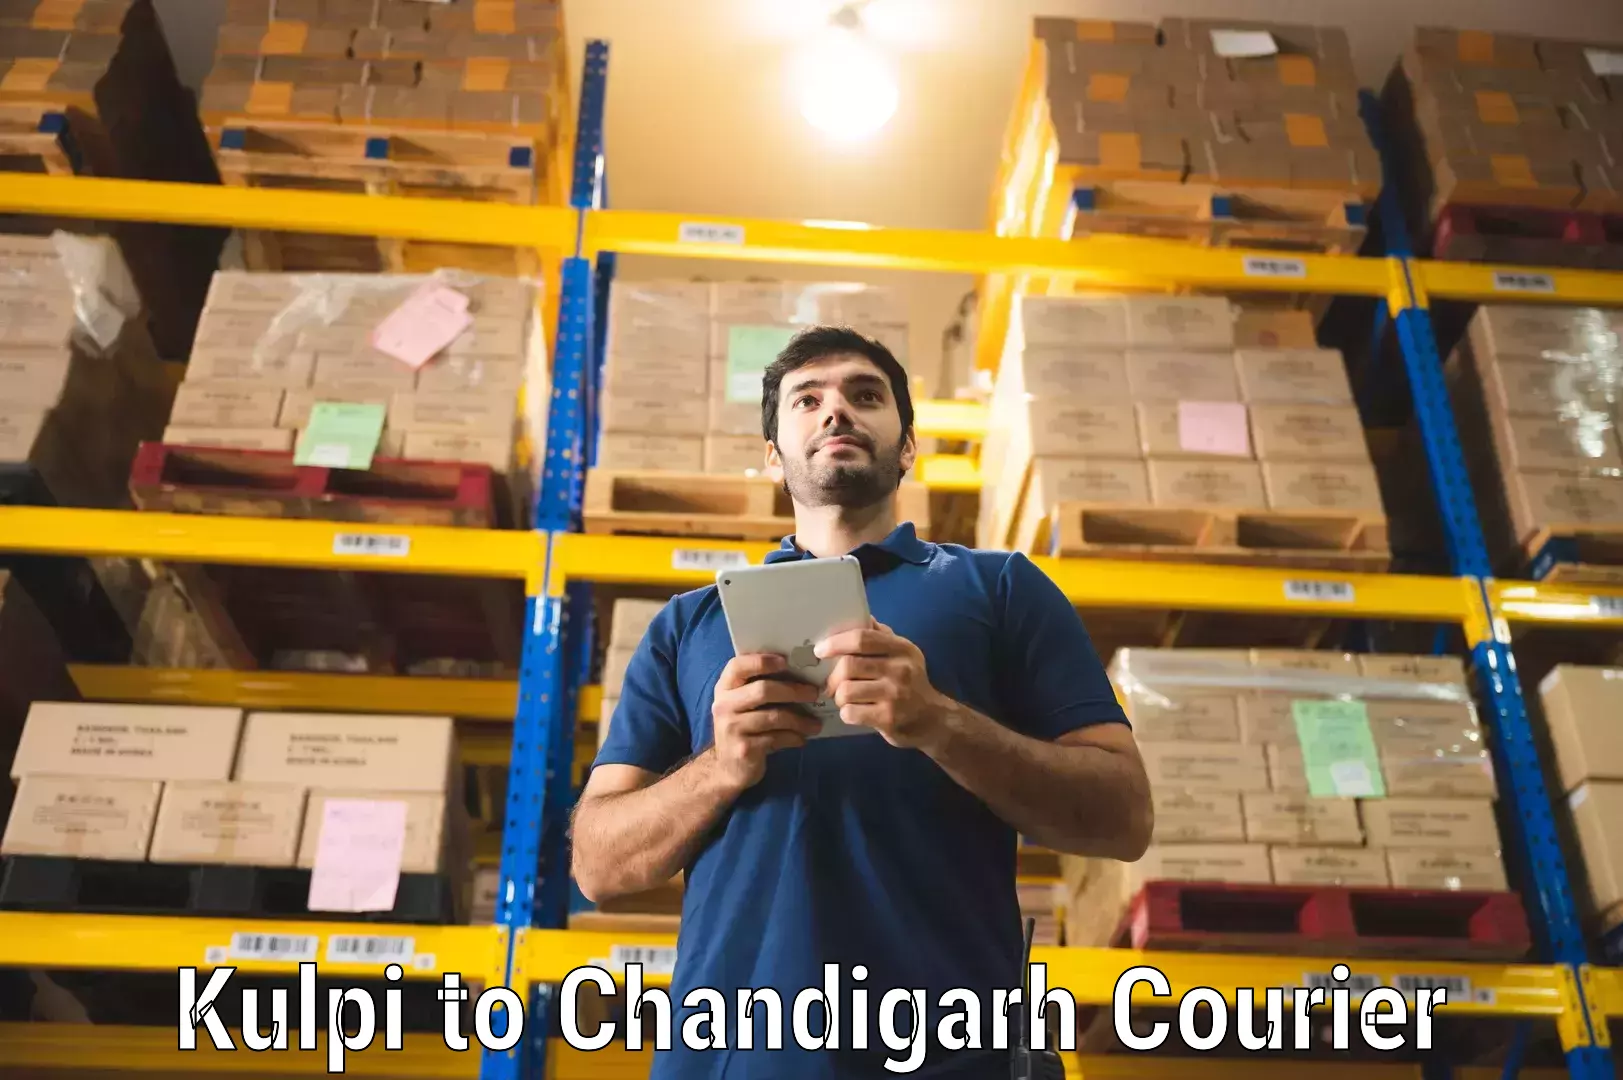 International courier networks Kulpi to Chandigarh